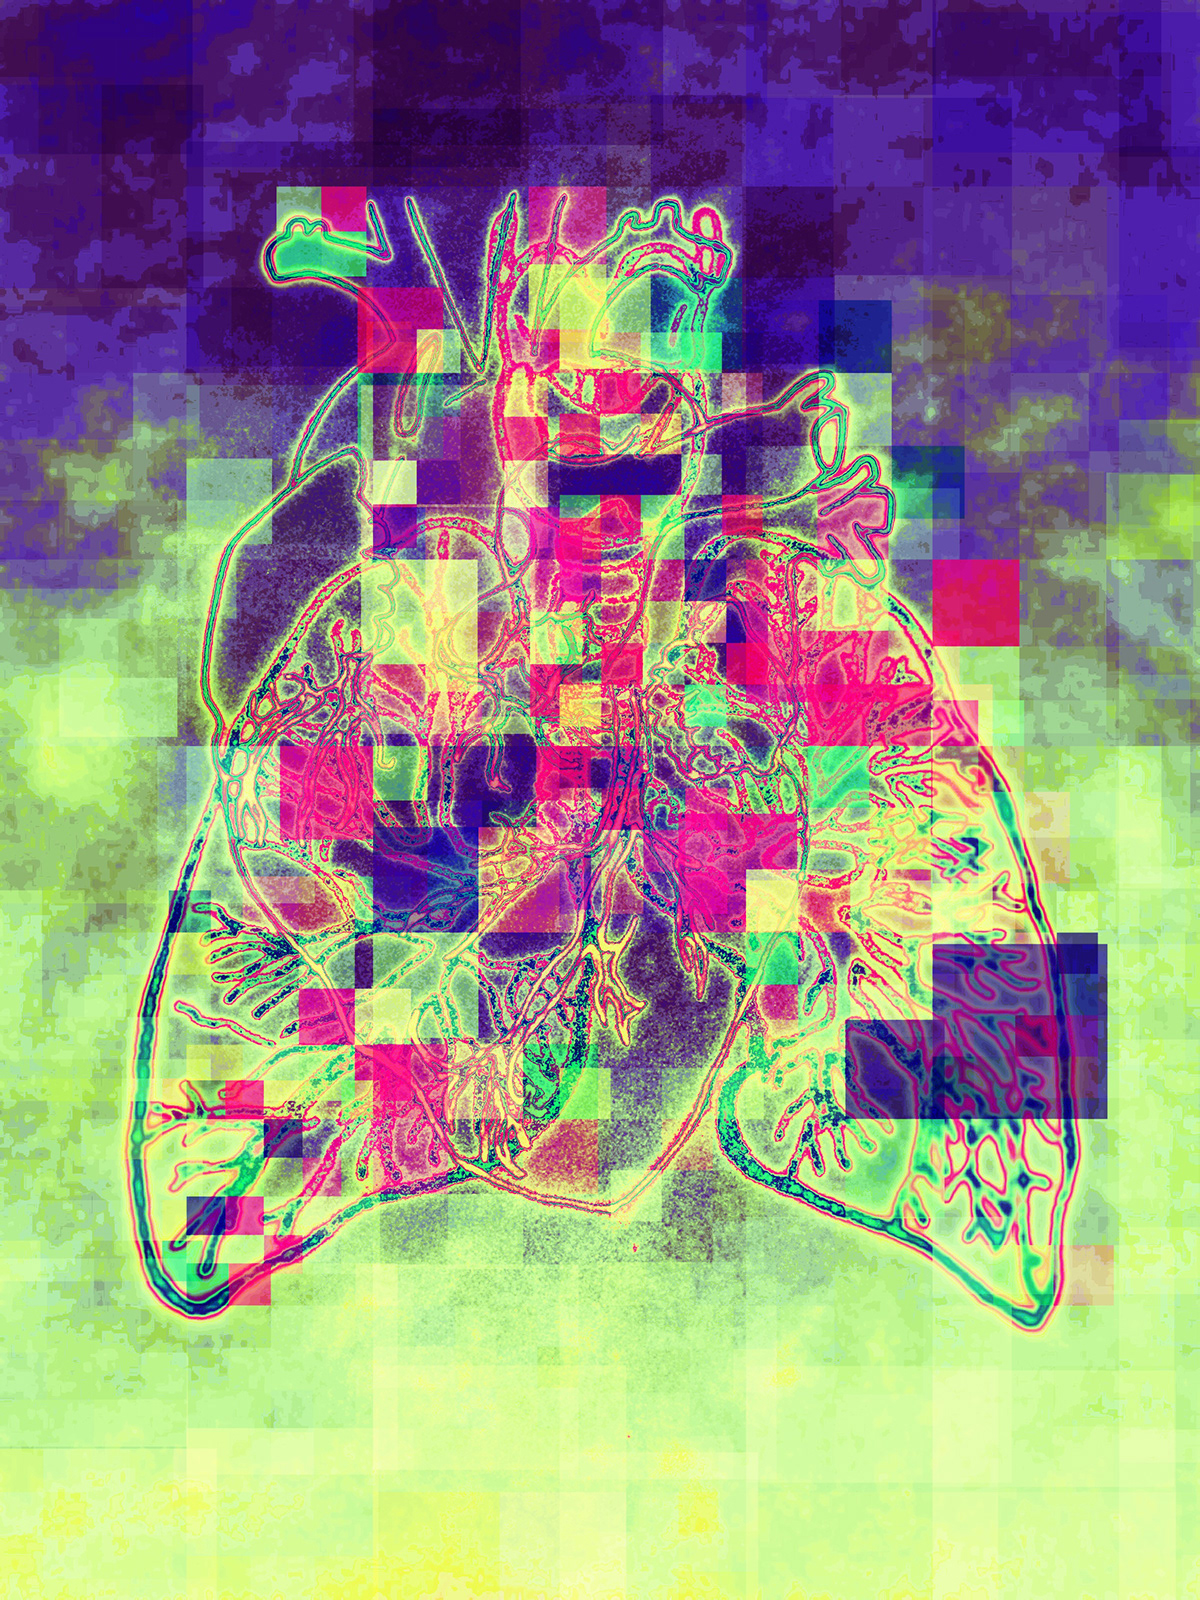 Glitch digital art photo image human integration colors pixel iphone cellphoneography